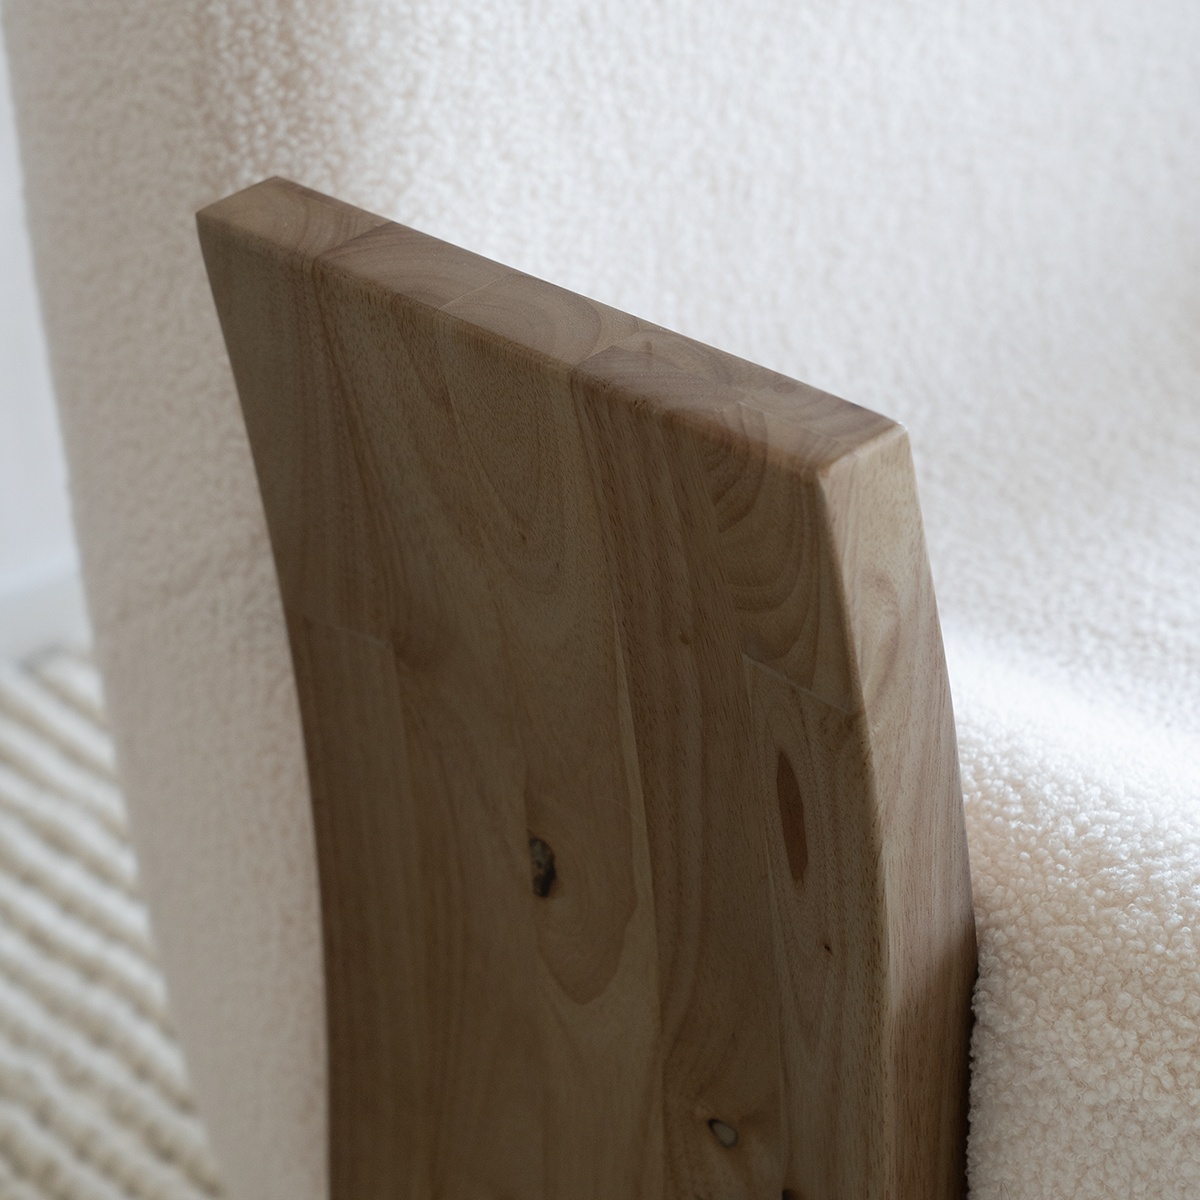 Christian Solid Wood Armchair - LJ1191  - WS Living - UAE - Arm chair Wood and steel Furnitures - Dubai